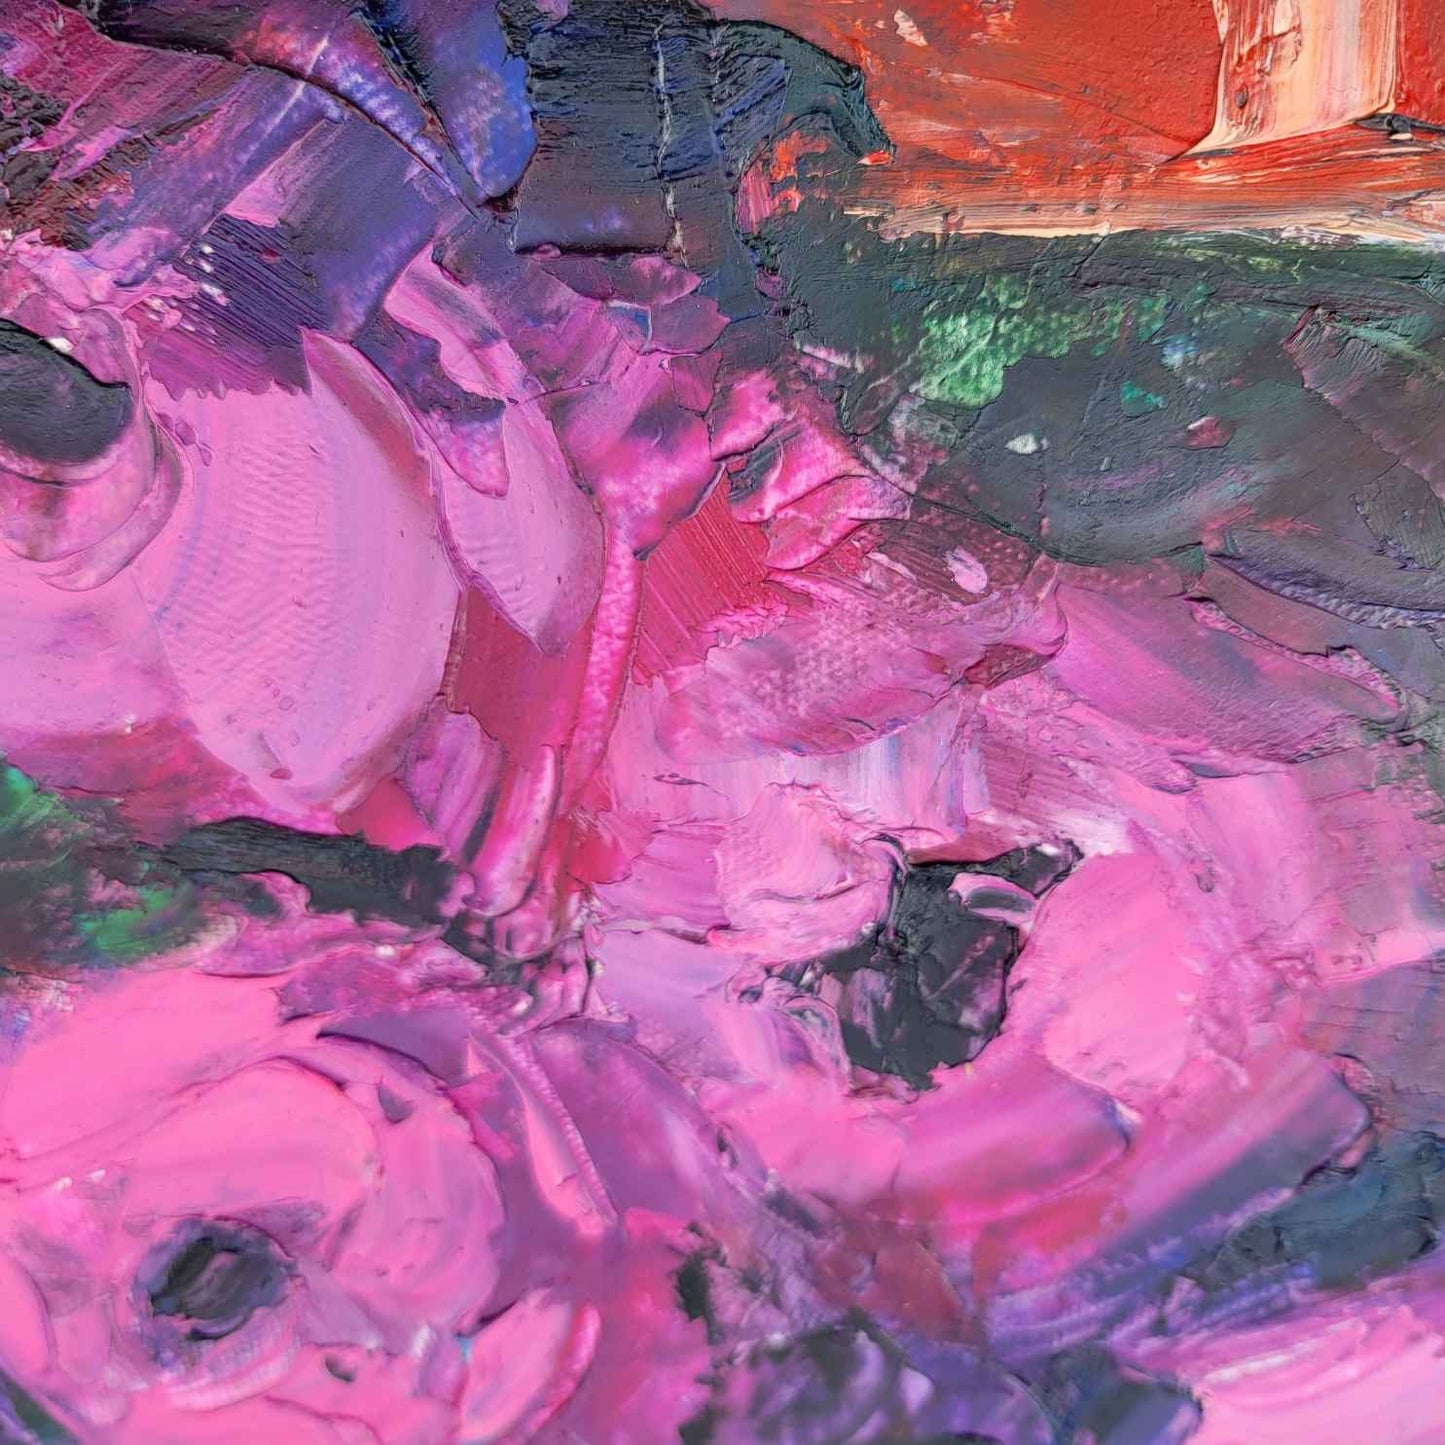 Violet Vase Painting 90x90 cm